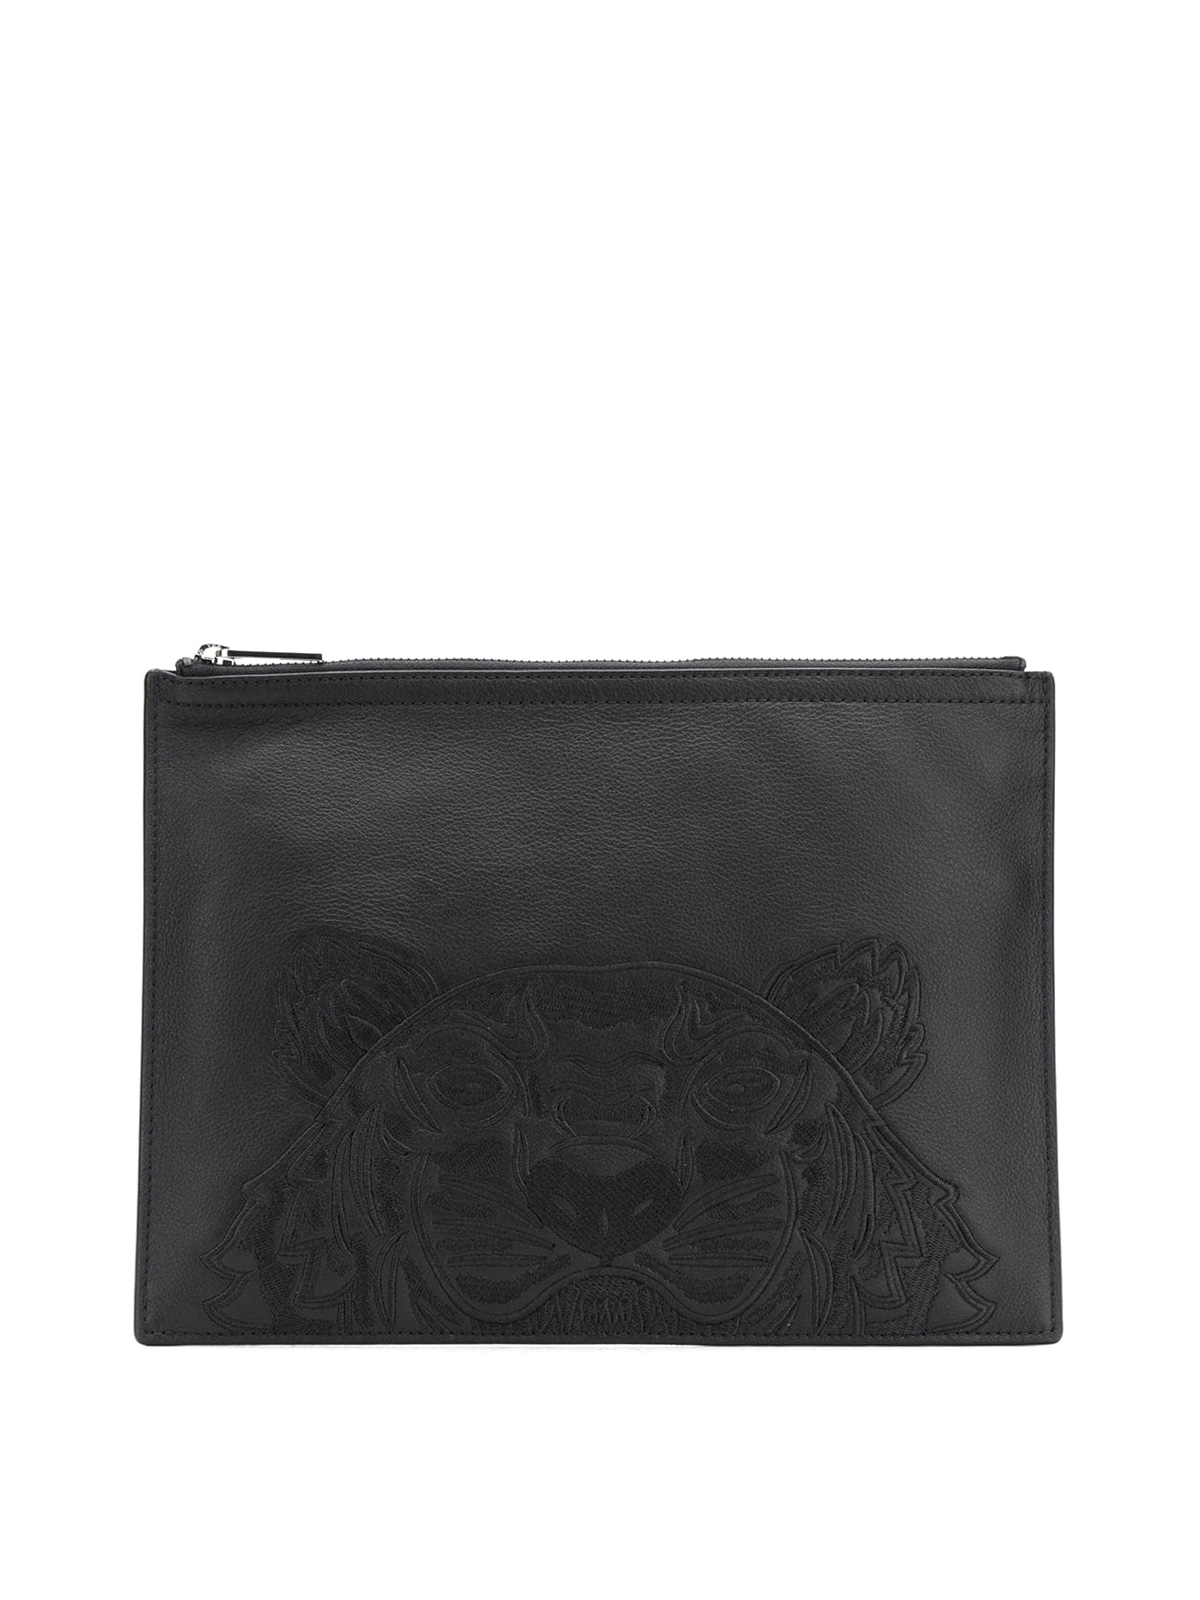 Kenzo - Tiger black leather clutch 